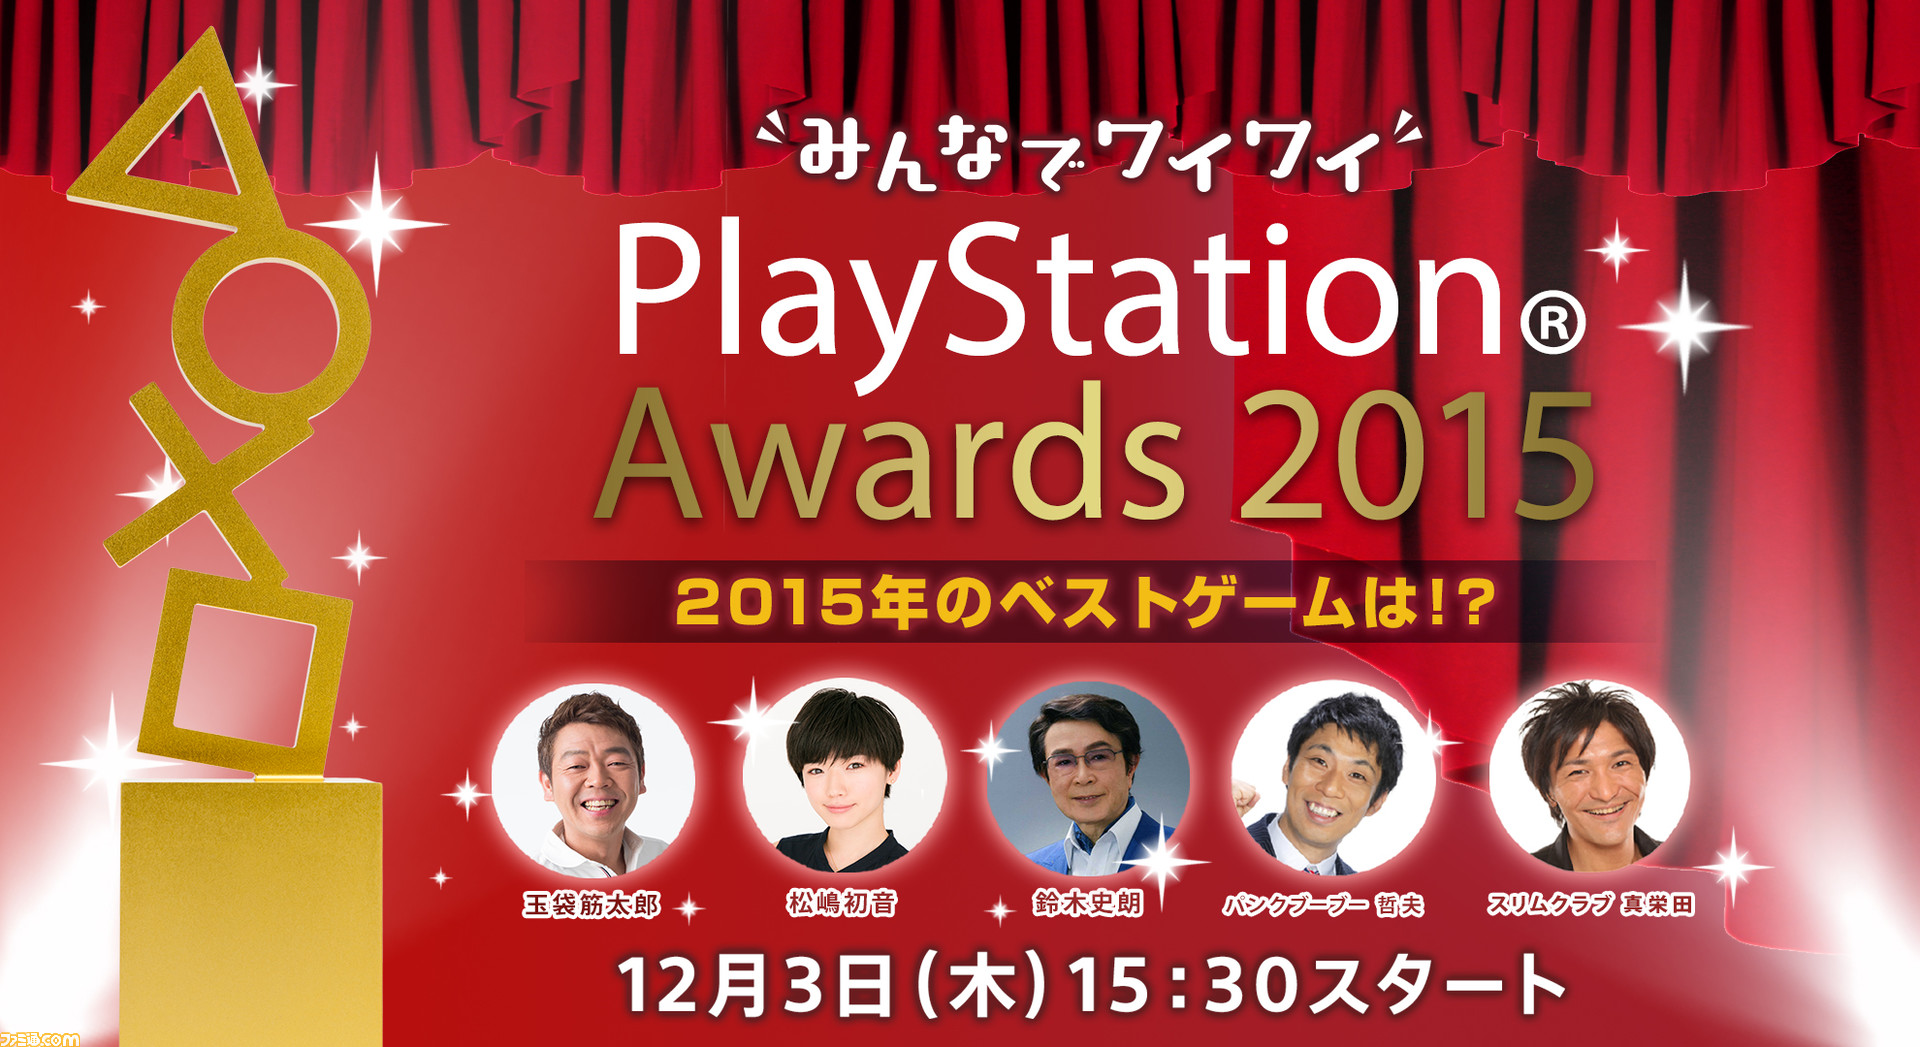 Playstation Awards 15 の公式生中継番組の放送が決定 スペシャルゲストとして鈴木史朗さんも出演 ファミ通 Com